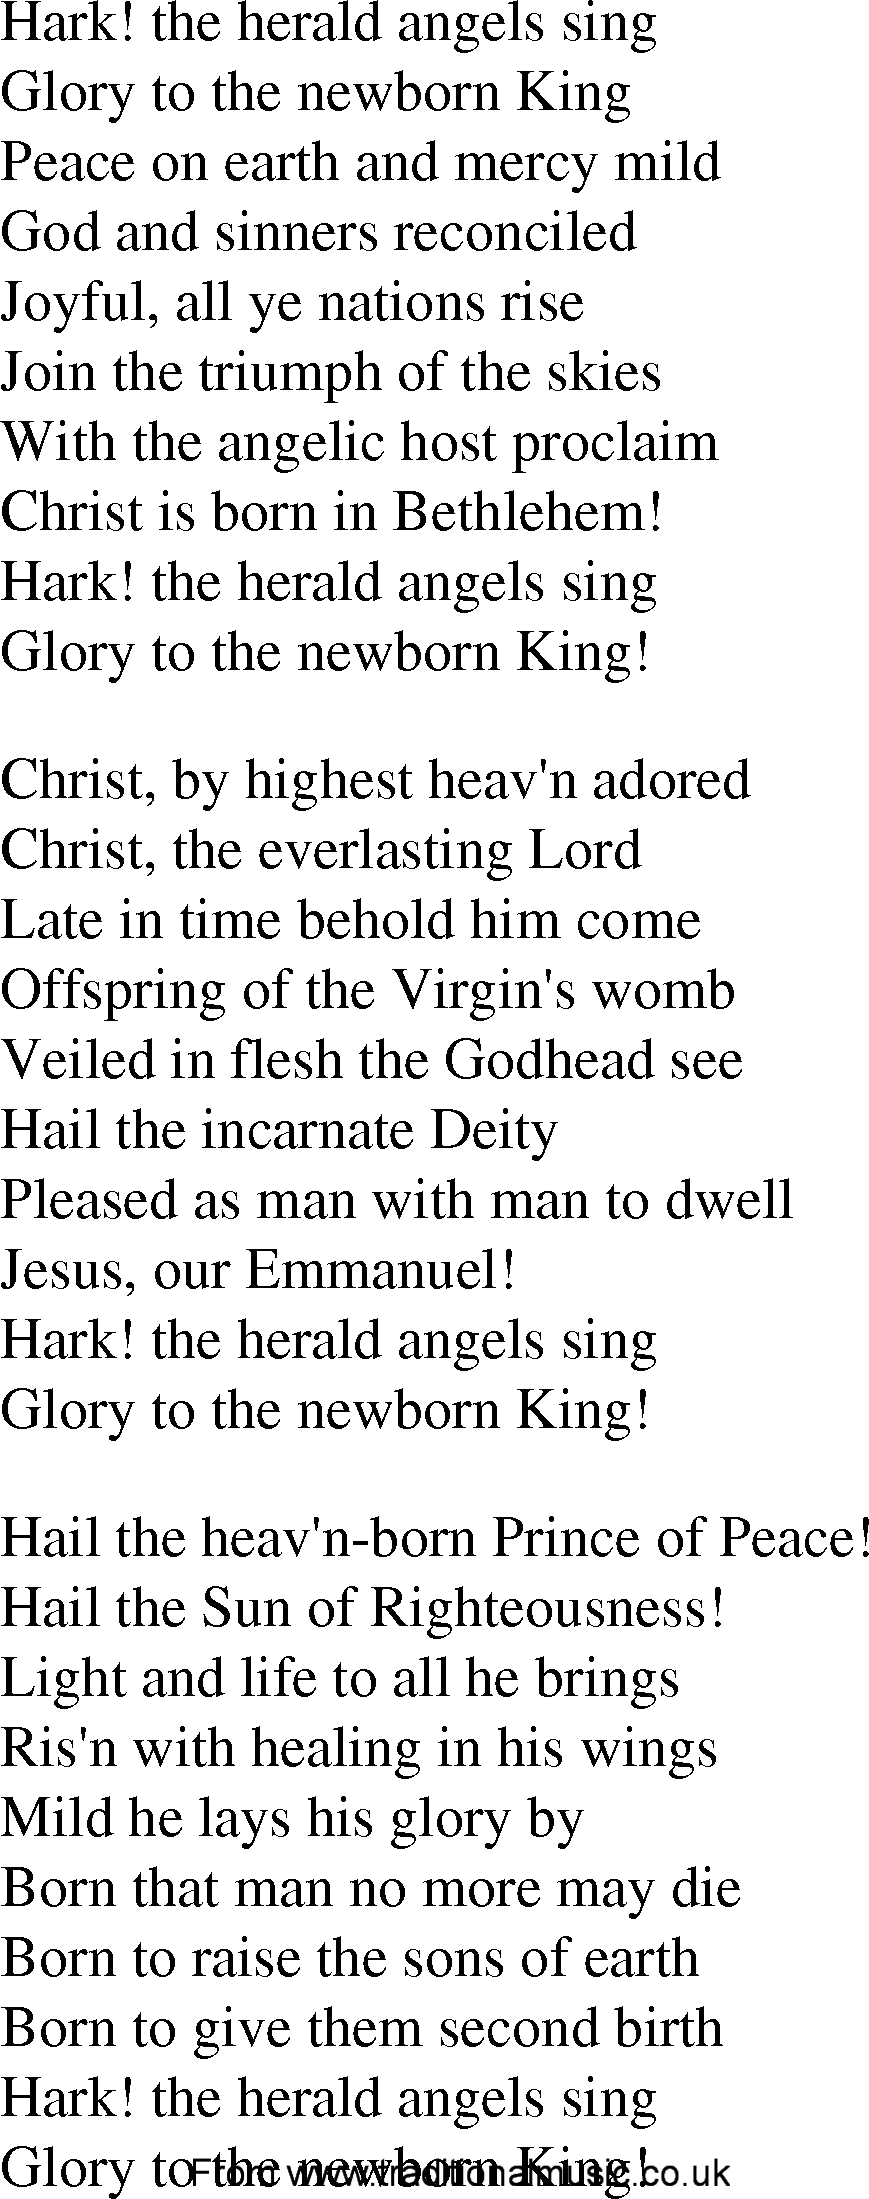 Gospel Song: hark_the_herald_angels_sing, lyrics and chords.